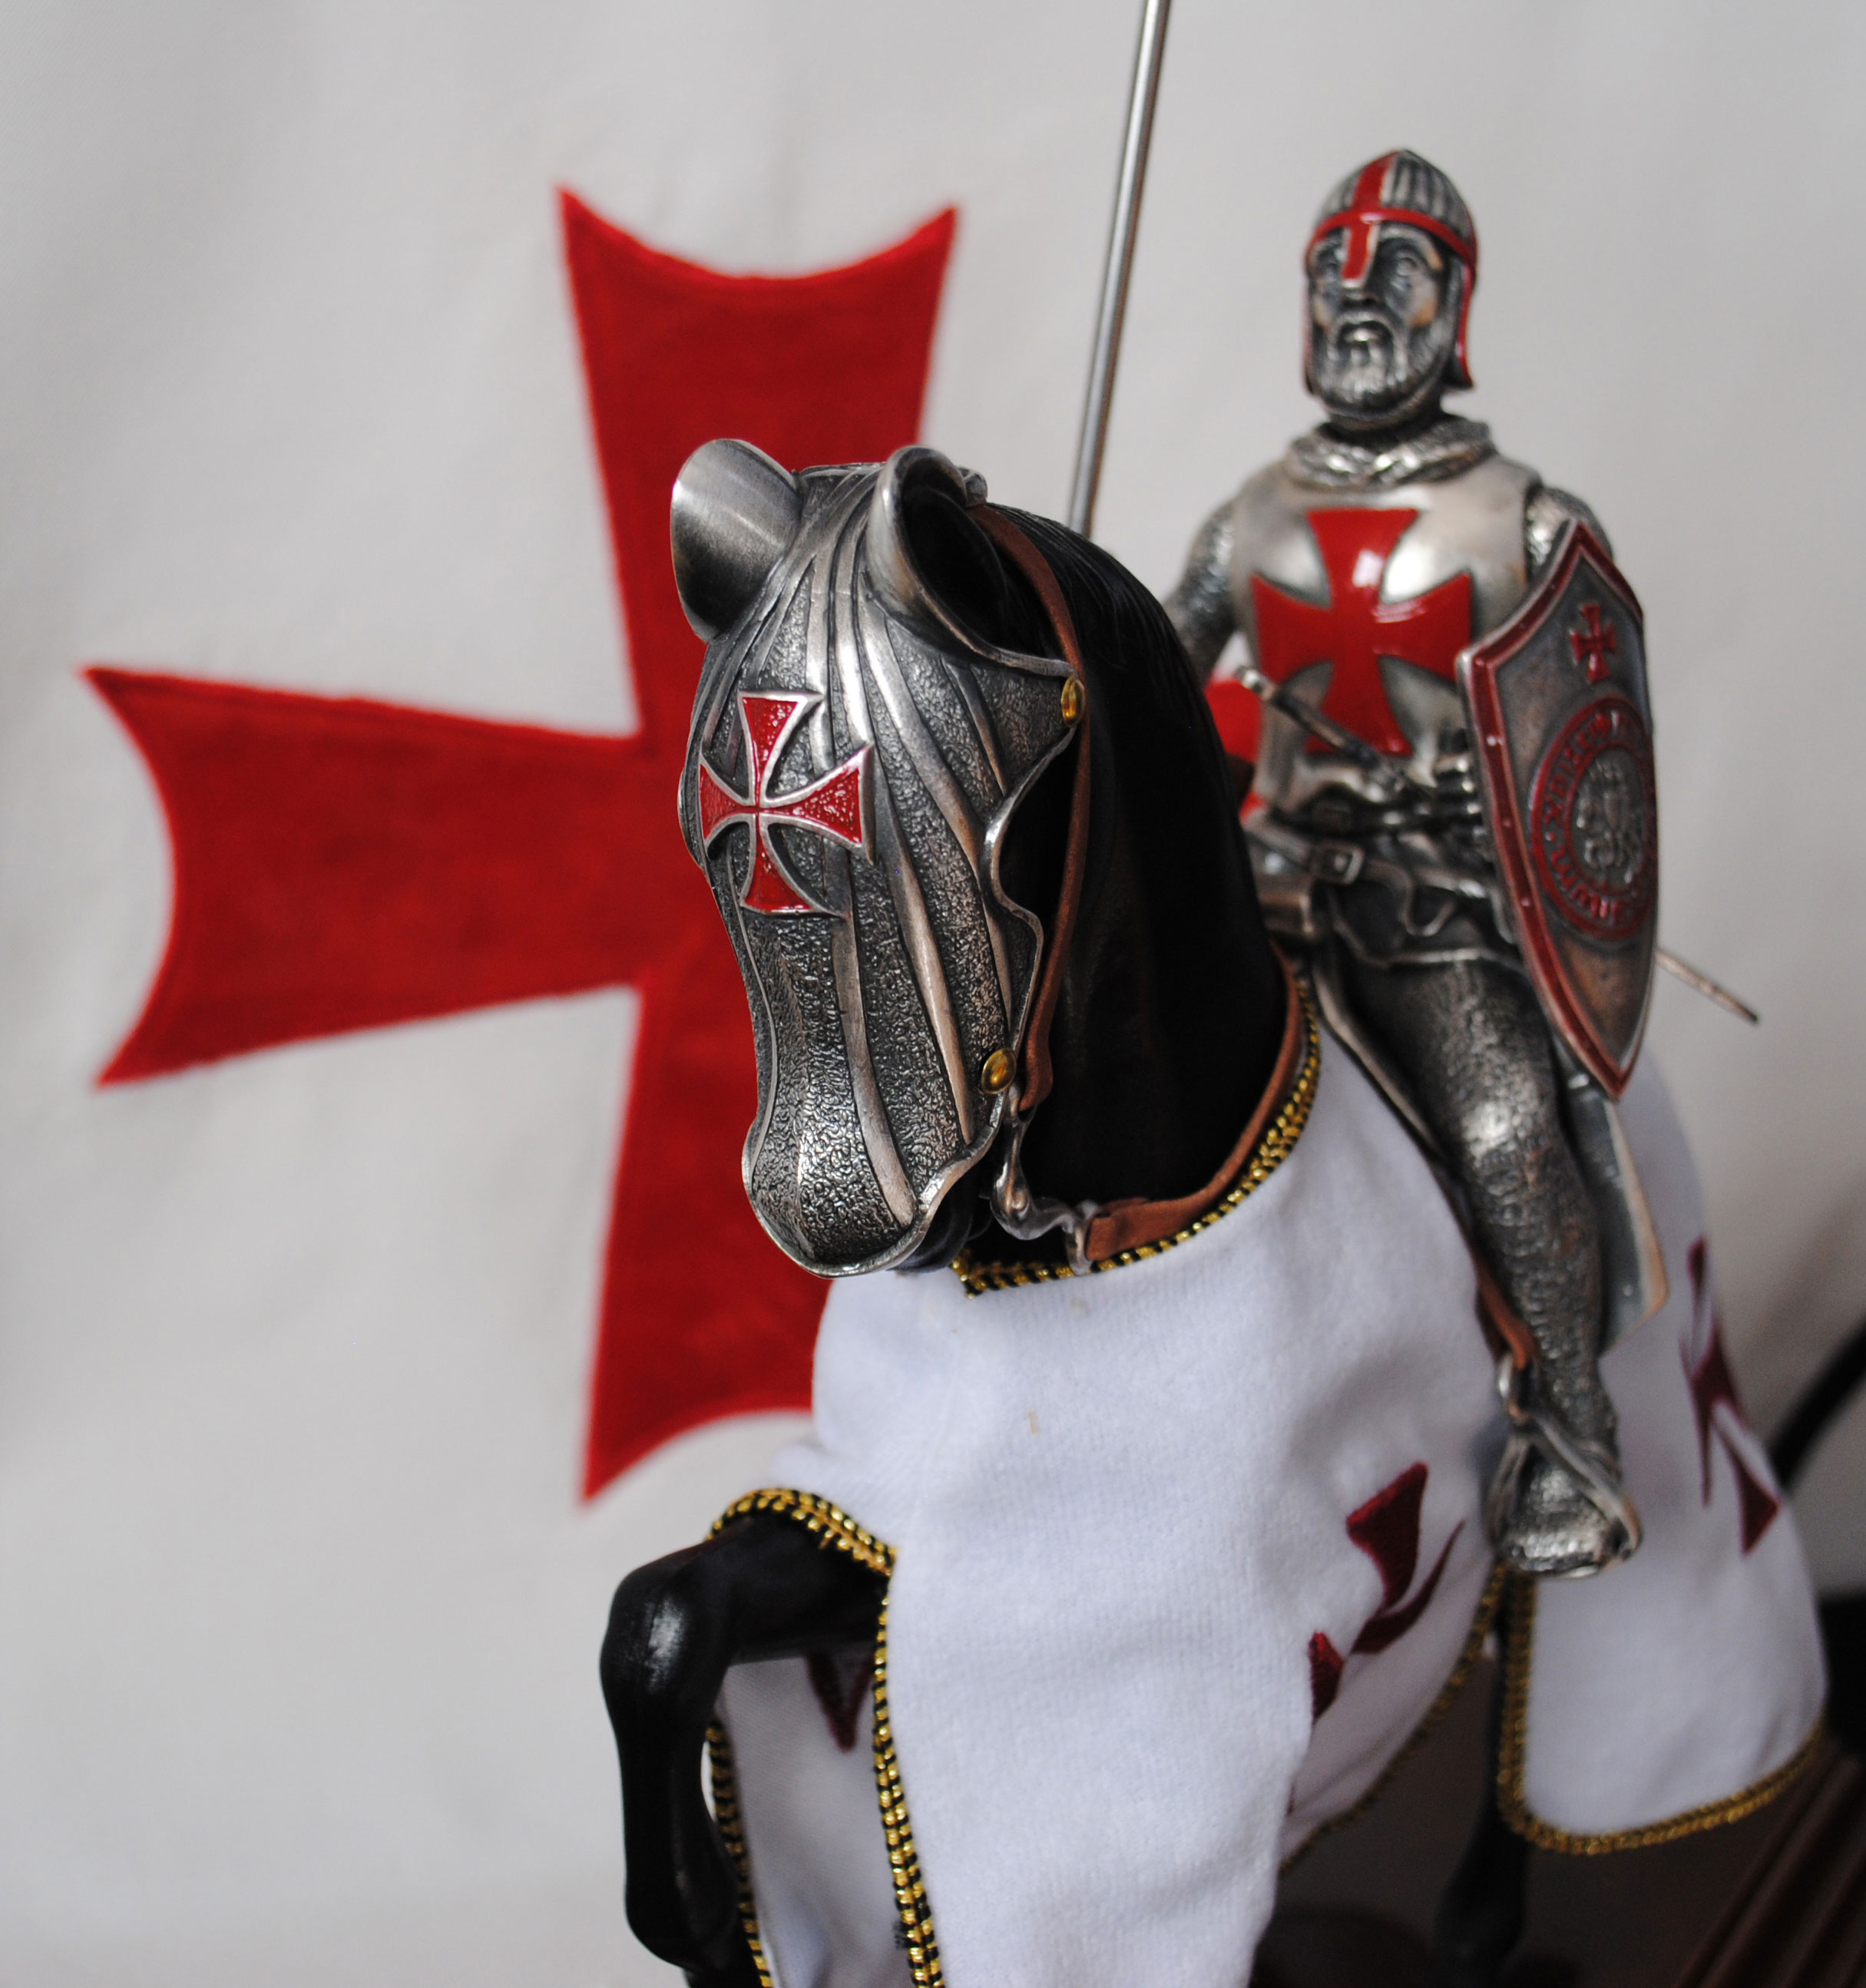 Miniature Templar knight on horse, equestrian armor